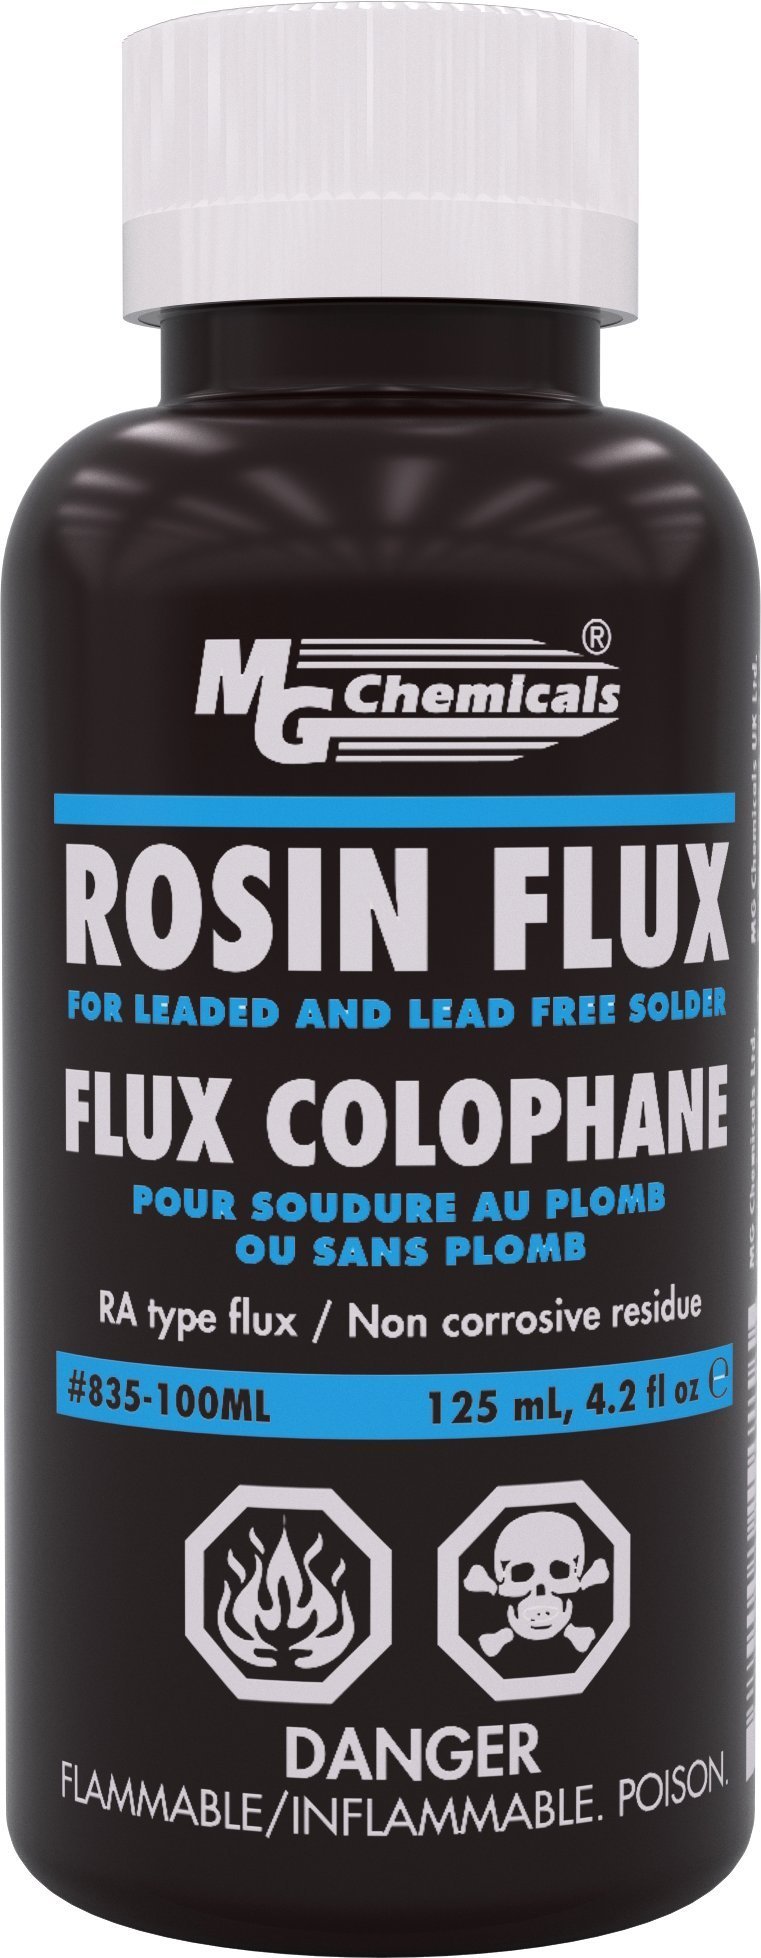  [AUSTRALIA] - MG Chemicals Liquid Rosin Flux, for Leaded and Lead Free Solder, 125 ml Bottle